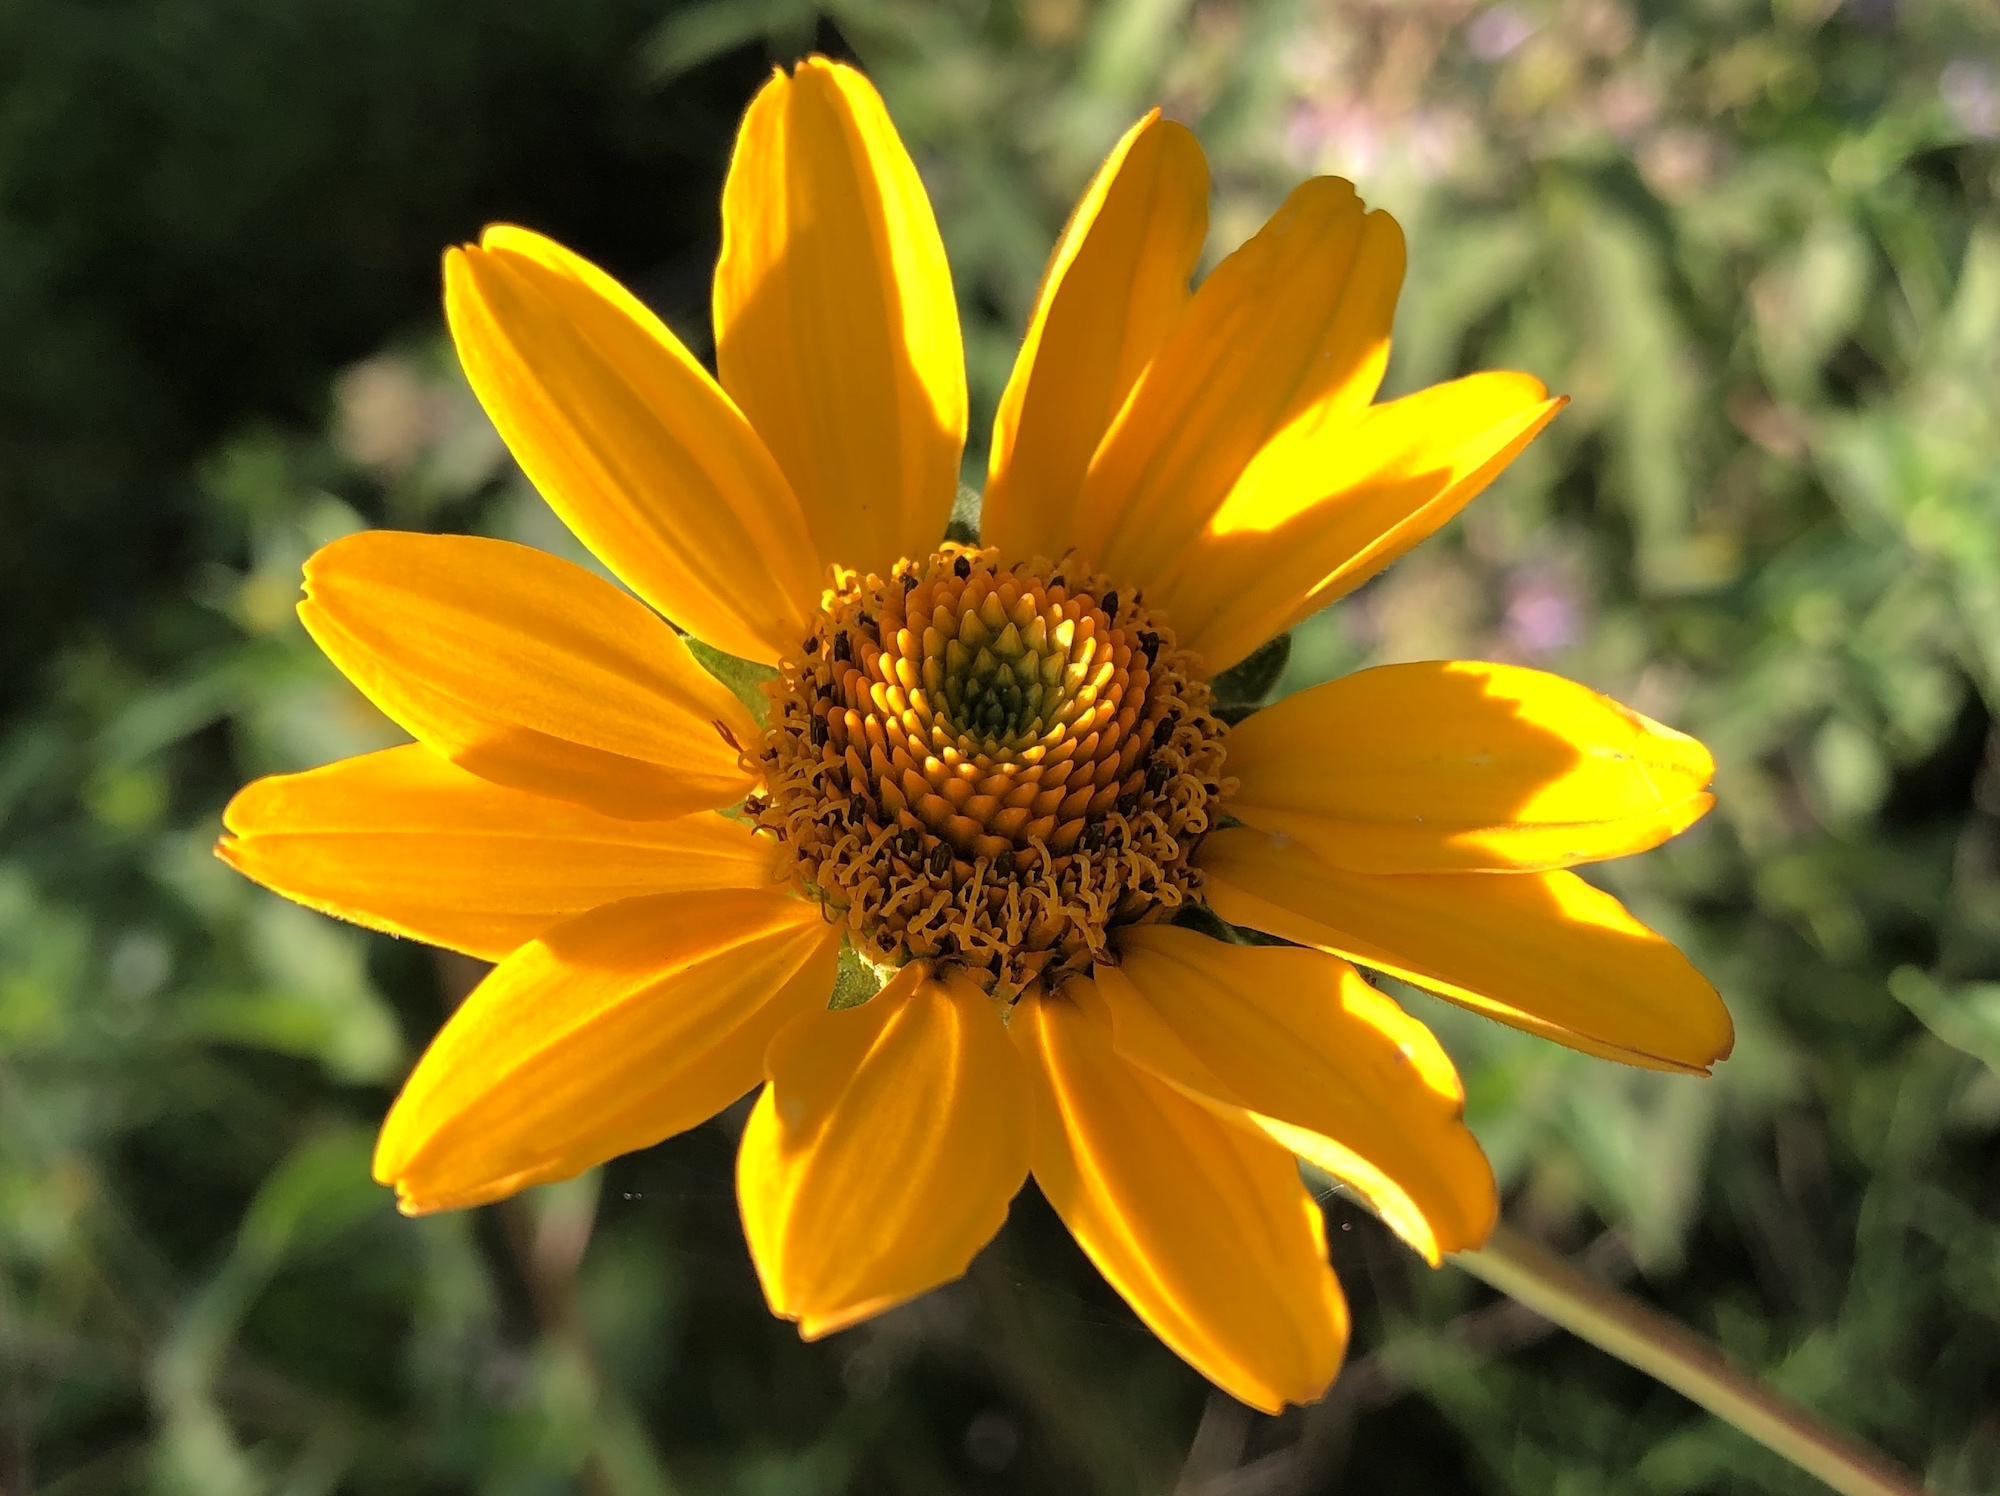 False Sunflower on shore of retaining pond in Madison, Wisconsin on July 31, 2020.